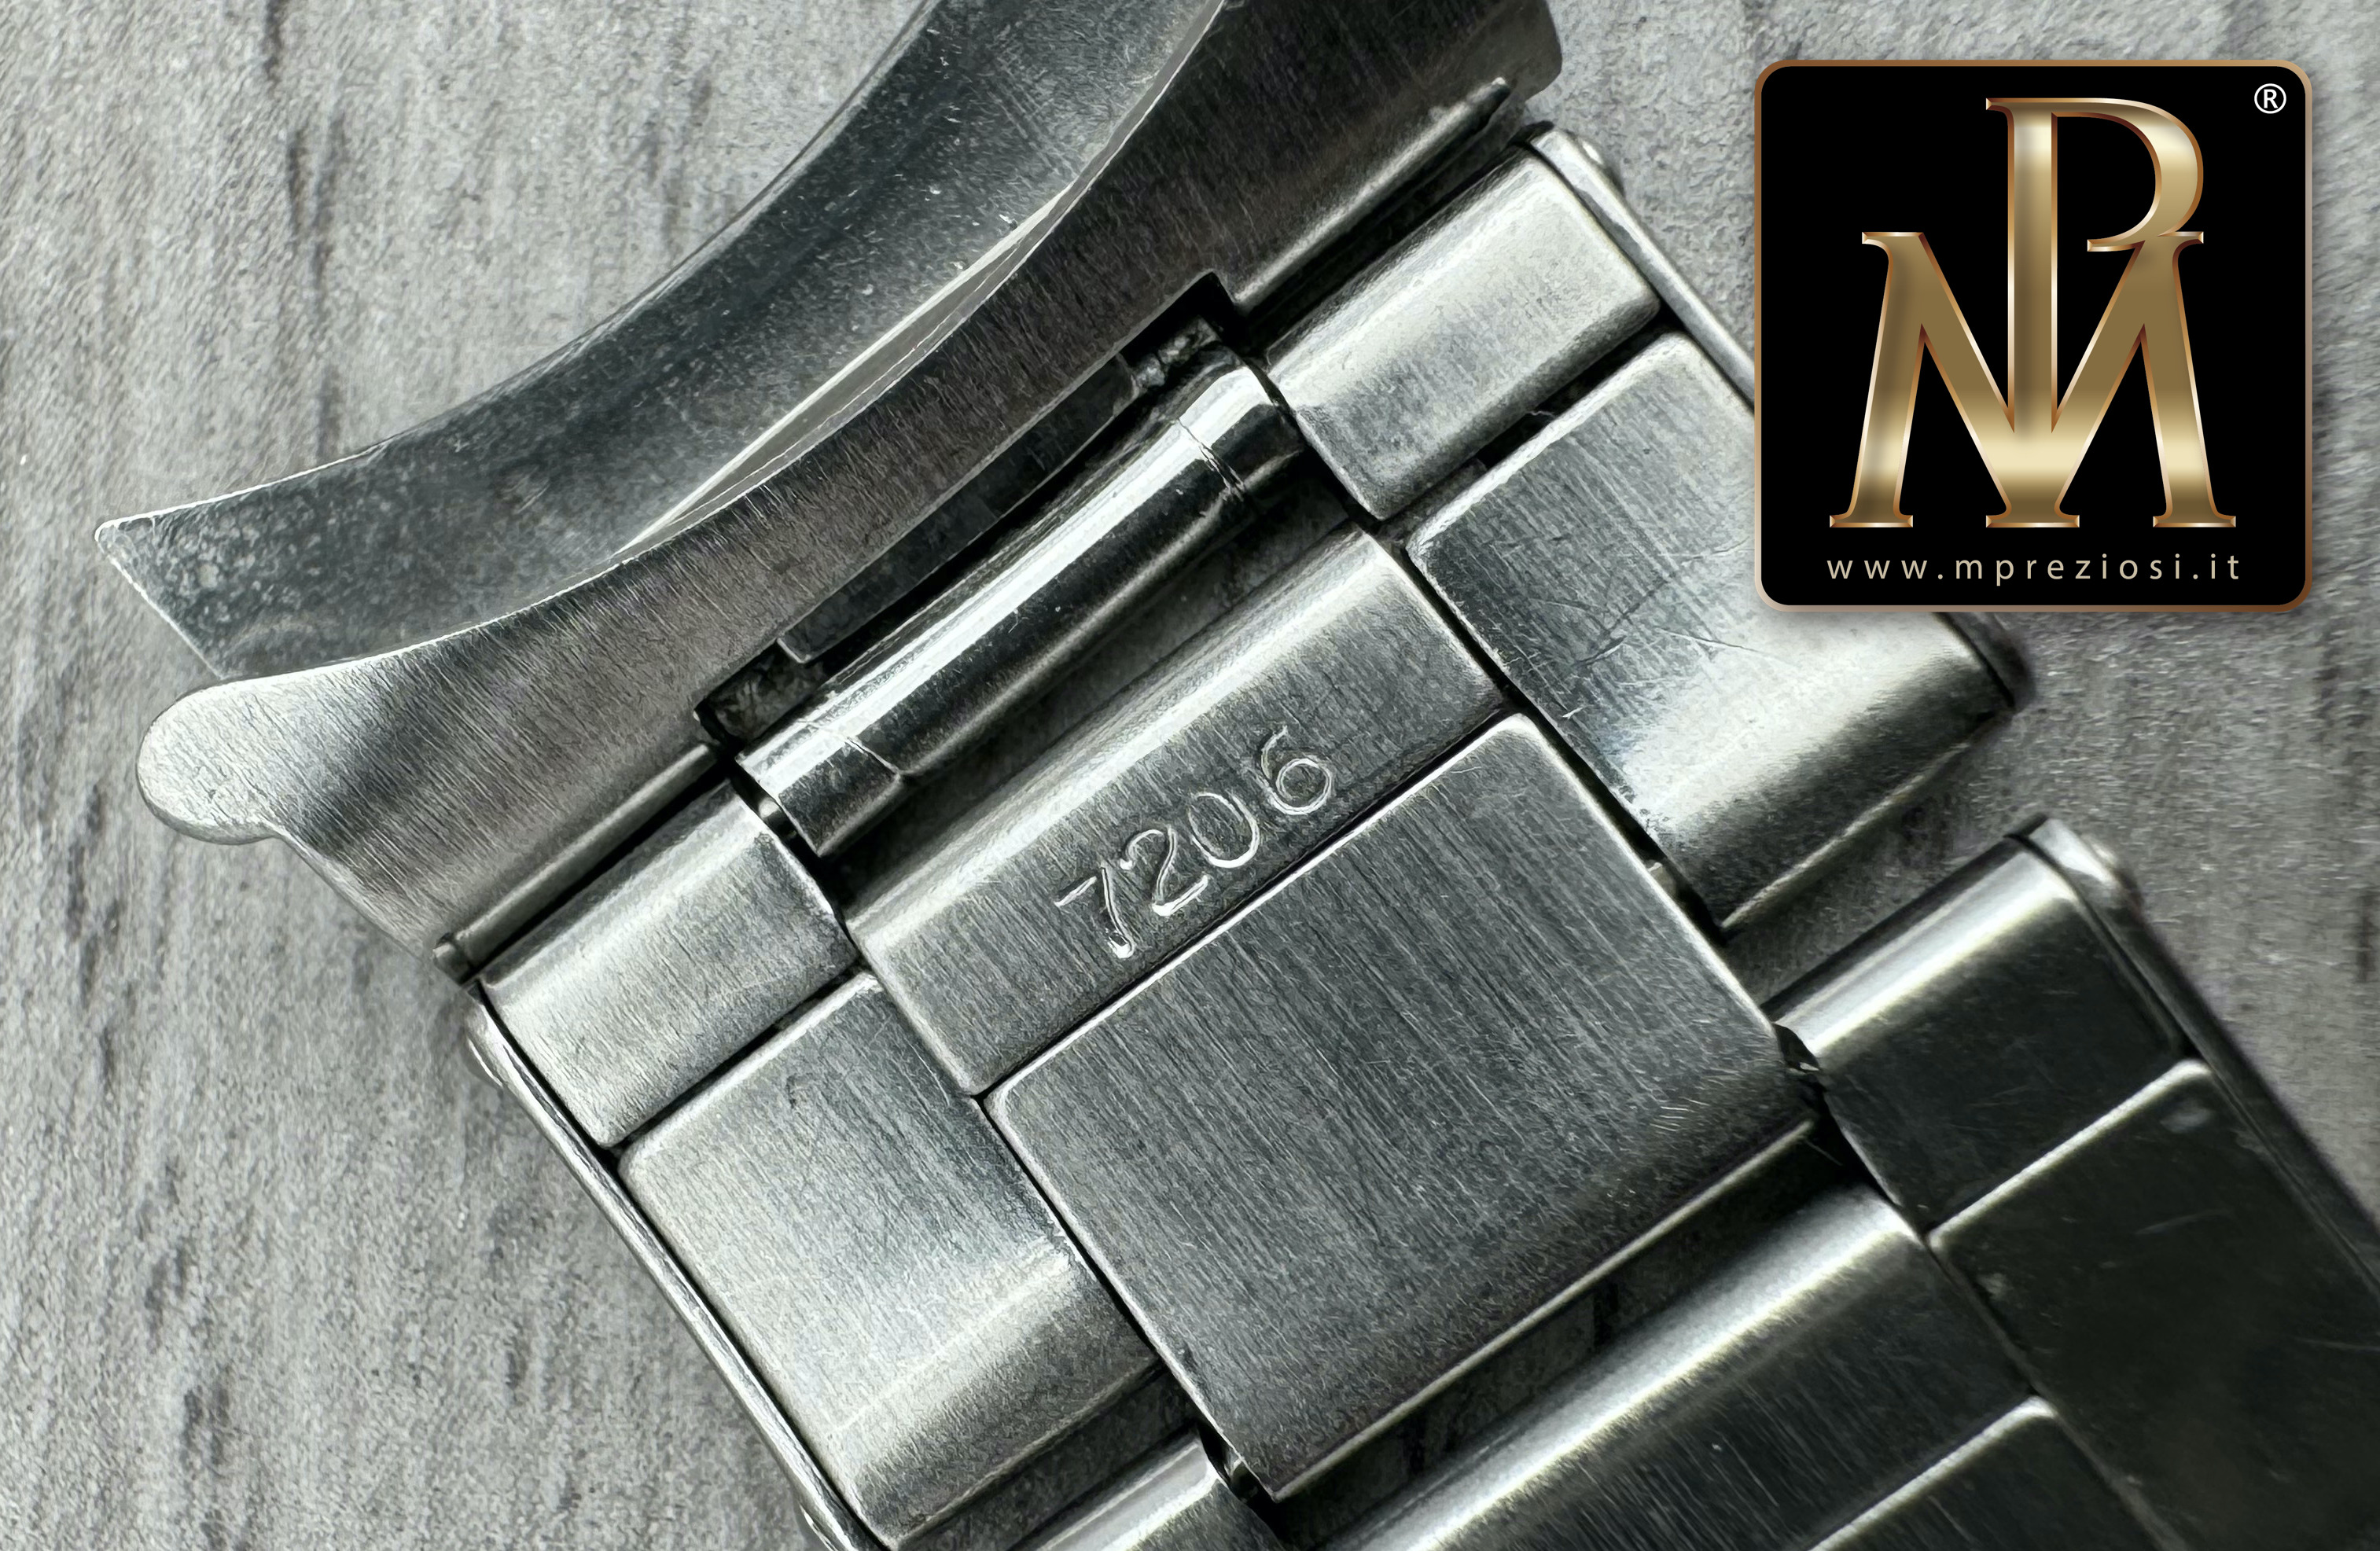 Rolex Oyster Bracelet 7206 endlinks 58 mpreziosi segrate